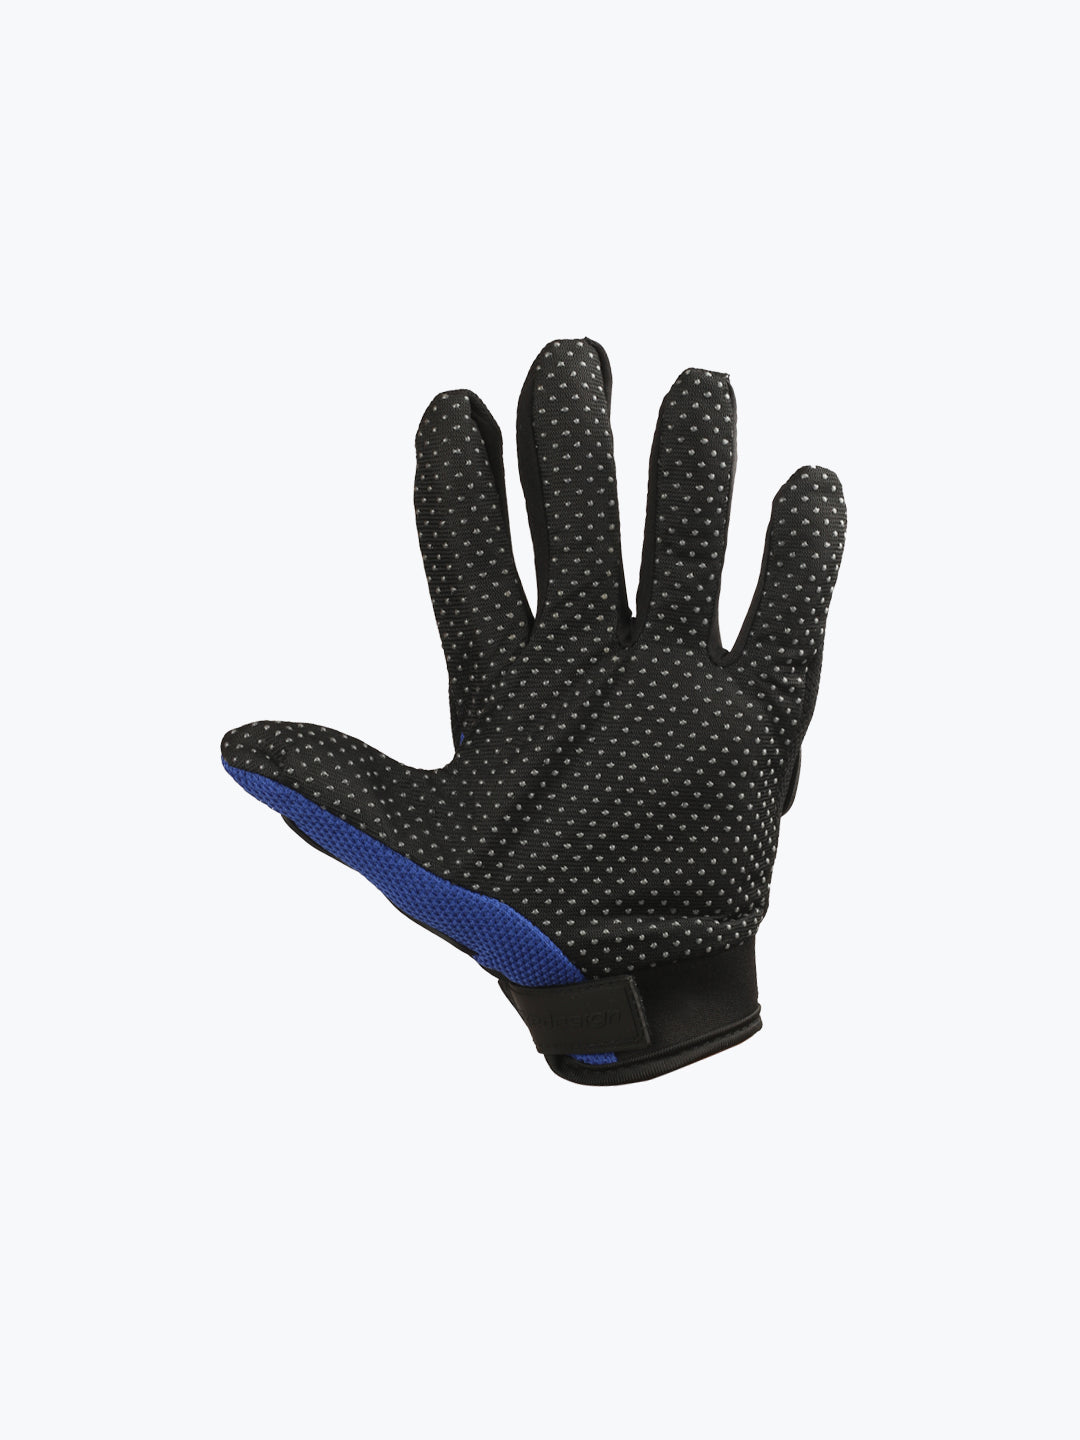 AXG Glove Black Blue